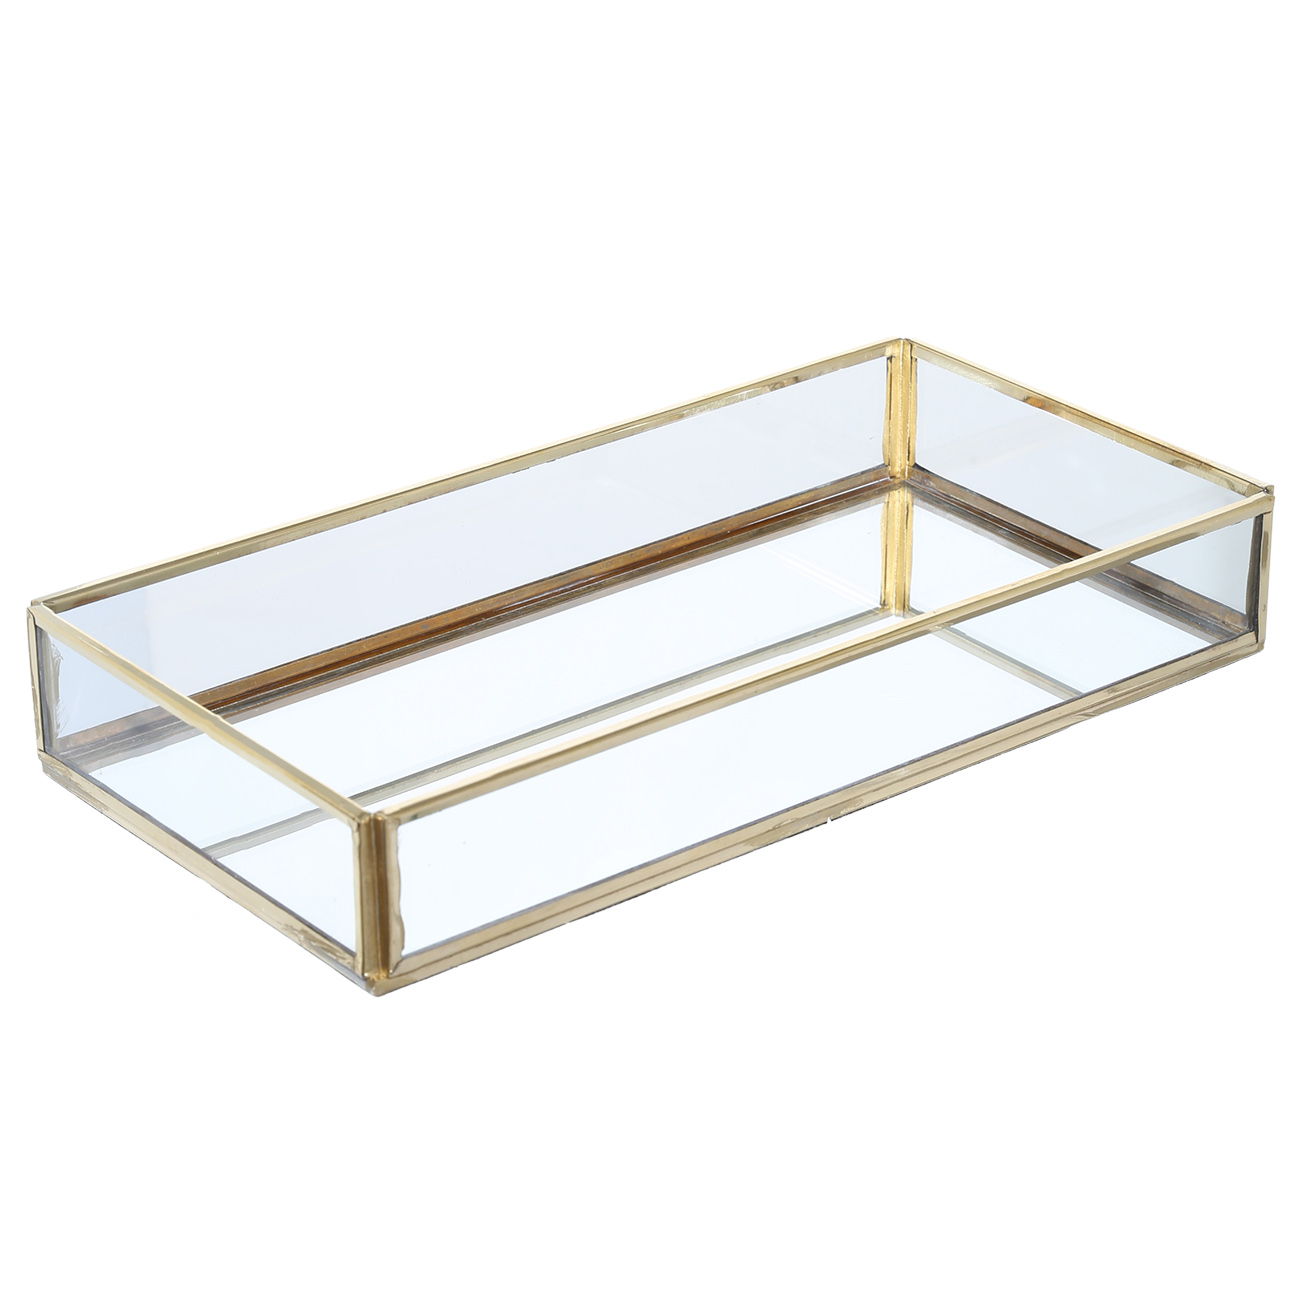 Decorative tray, 13x25 cm, metal / glass, rectangular, golden, Trend изображение № 2